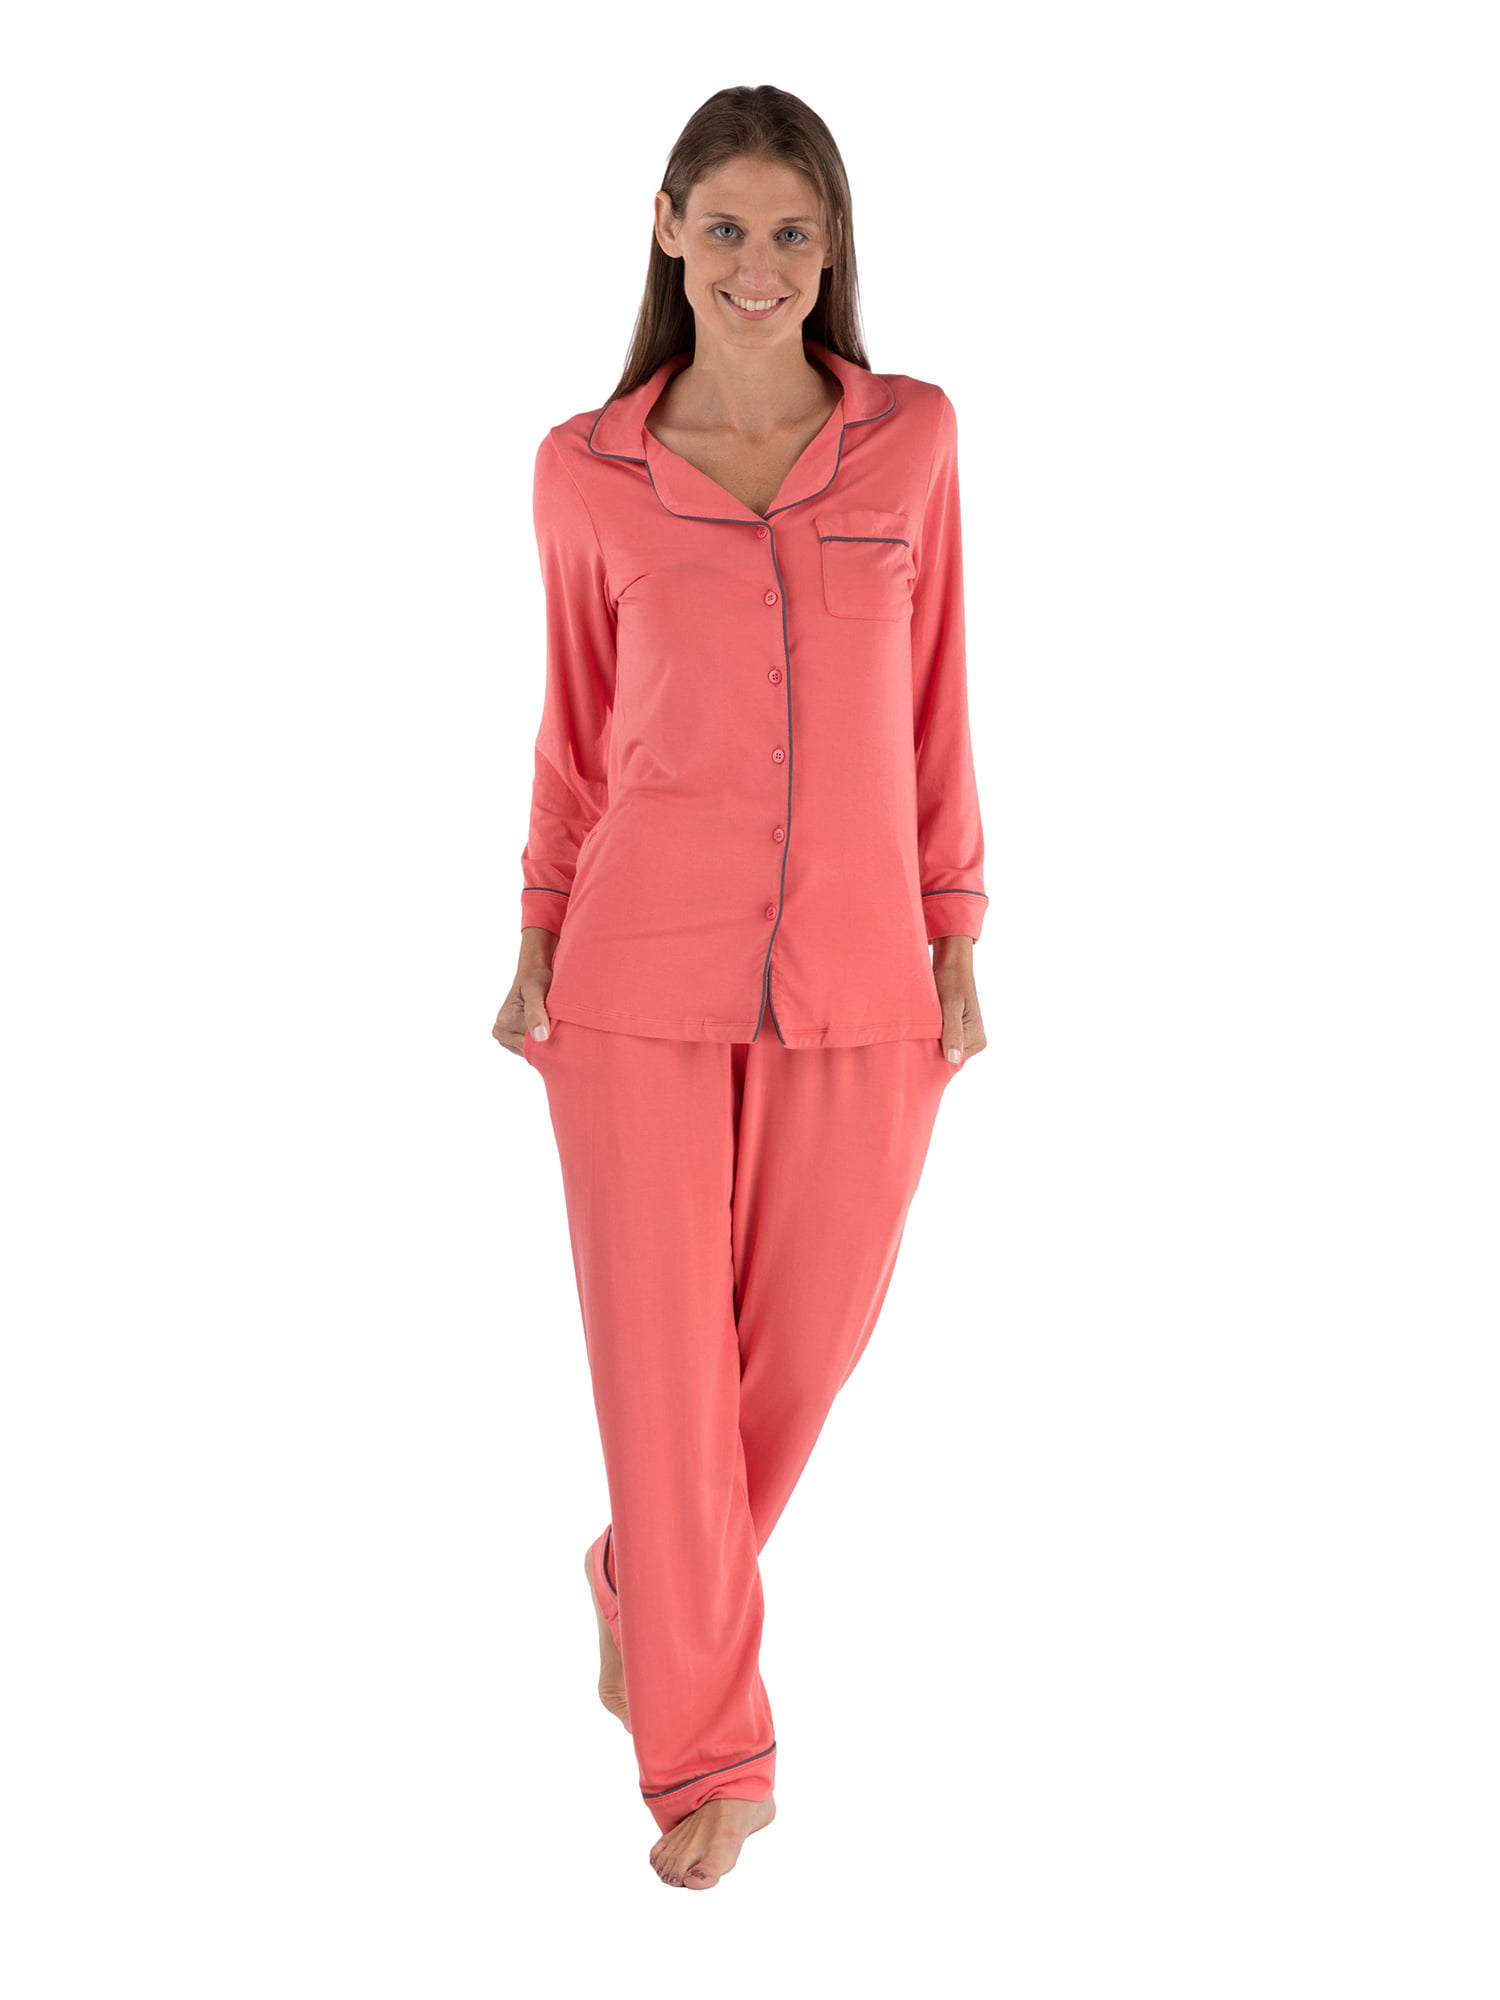 Sleepyheads Women’s Sleepwear Long Sleeve Striped Knit Pajama Set